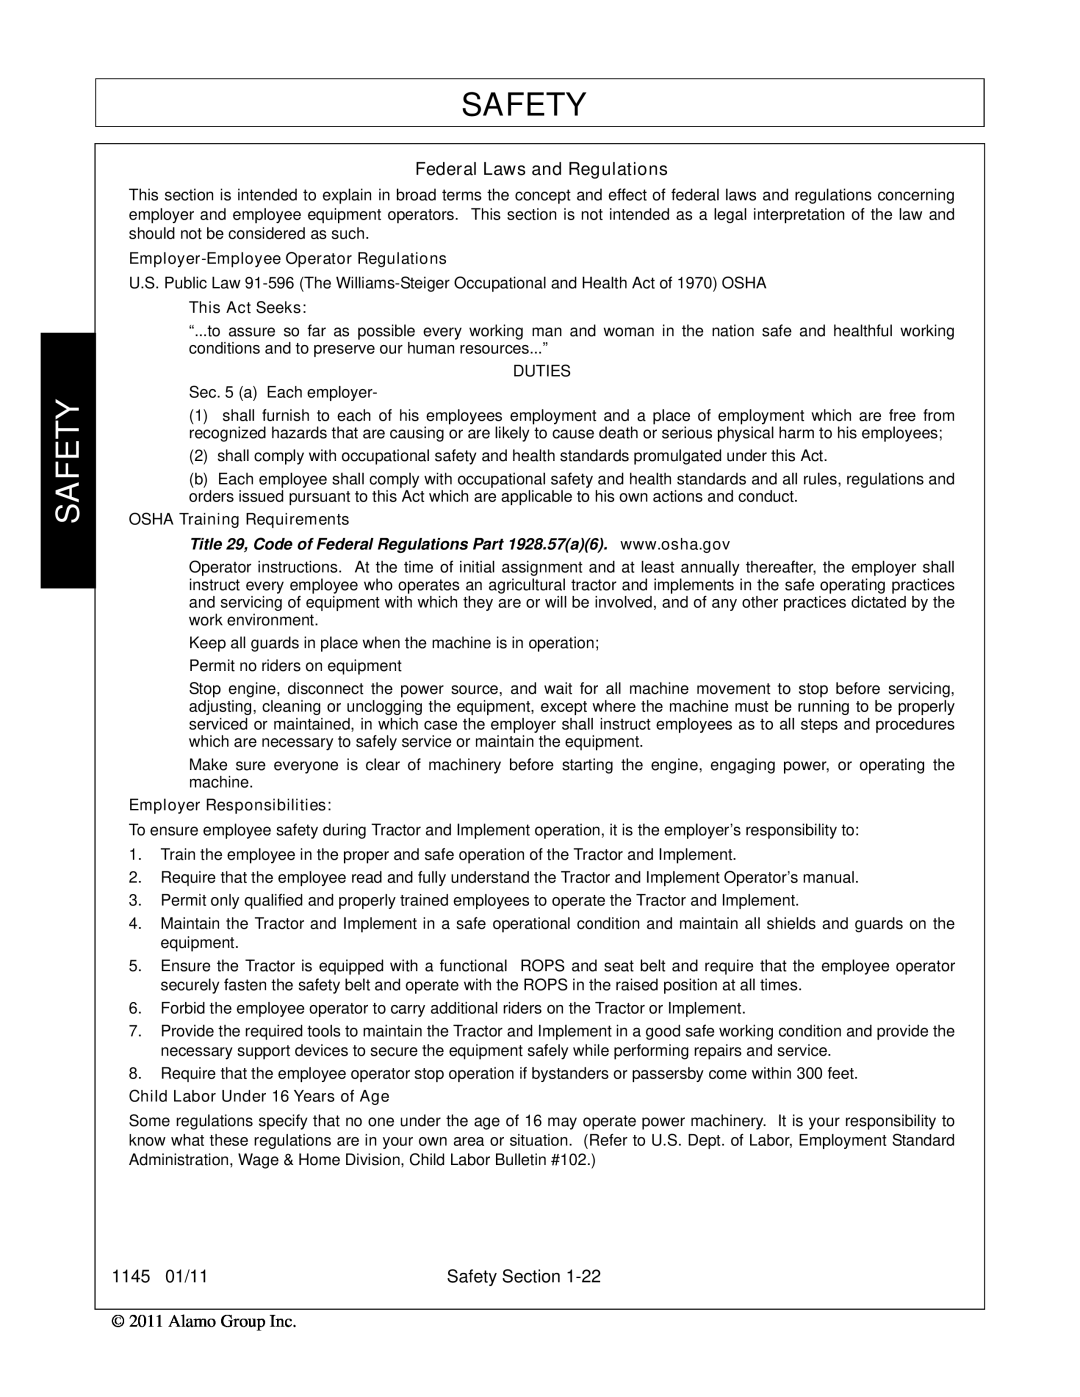 Bush Hog 1145 manual Safety, Employer-Employee Operator Regulations, This Act Seeks, Duties, OSHA Training Requirements 